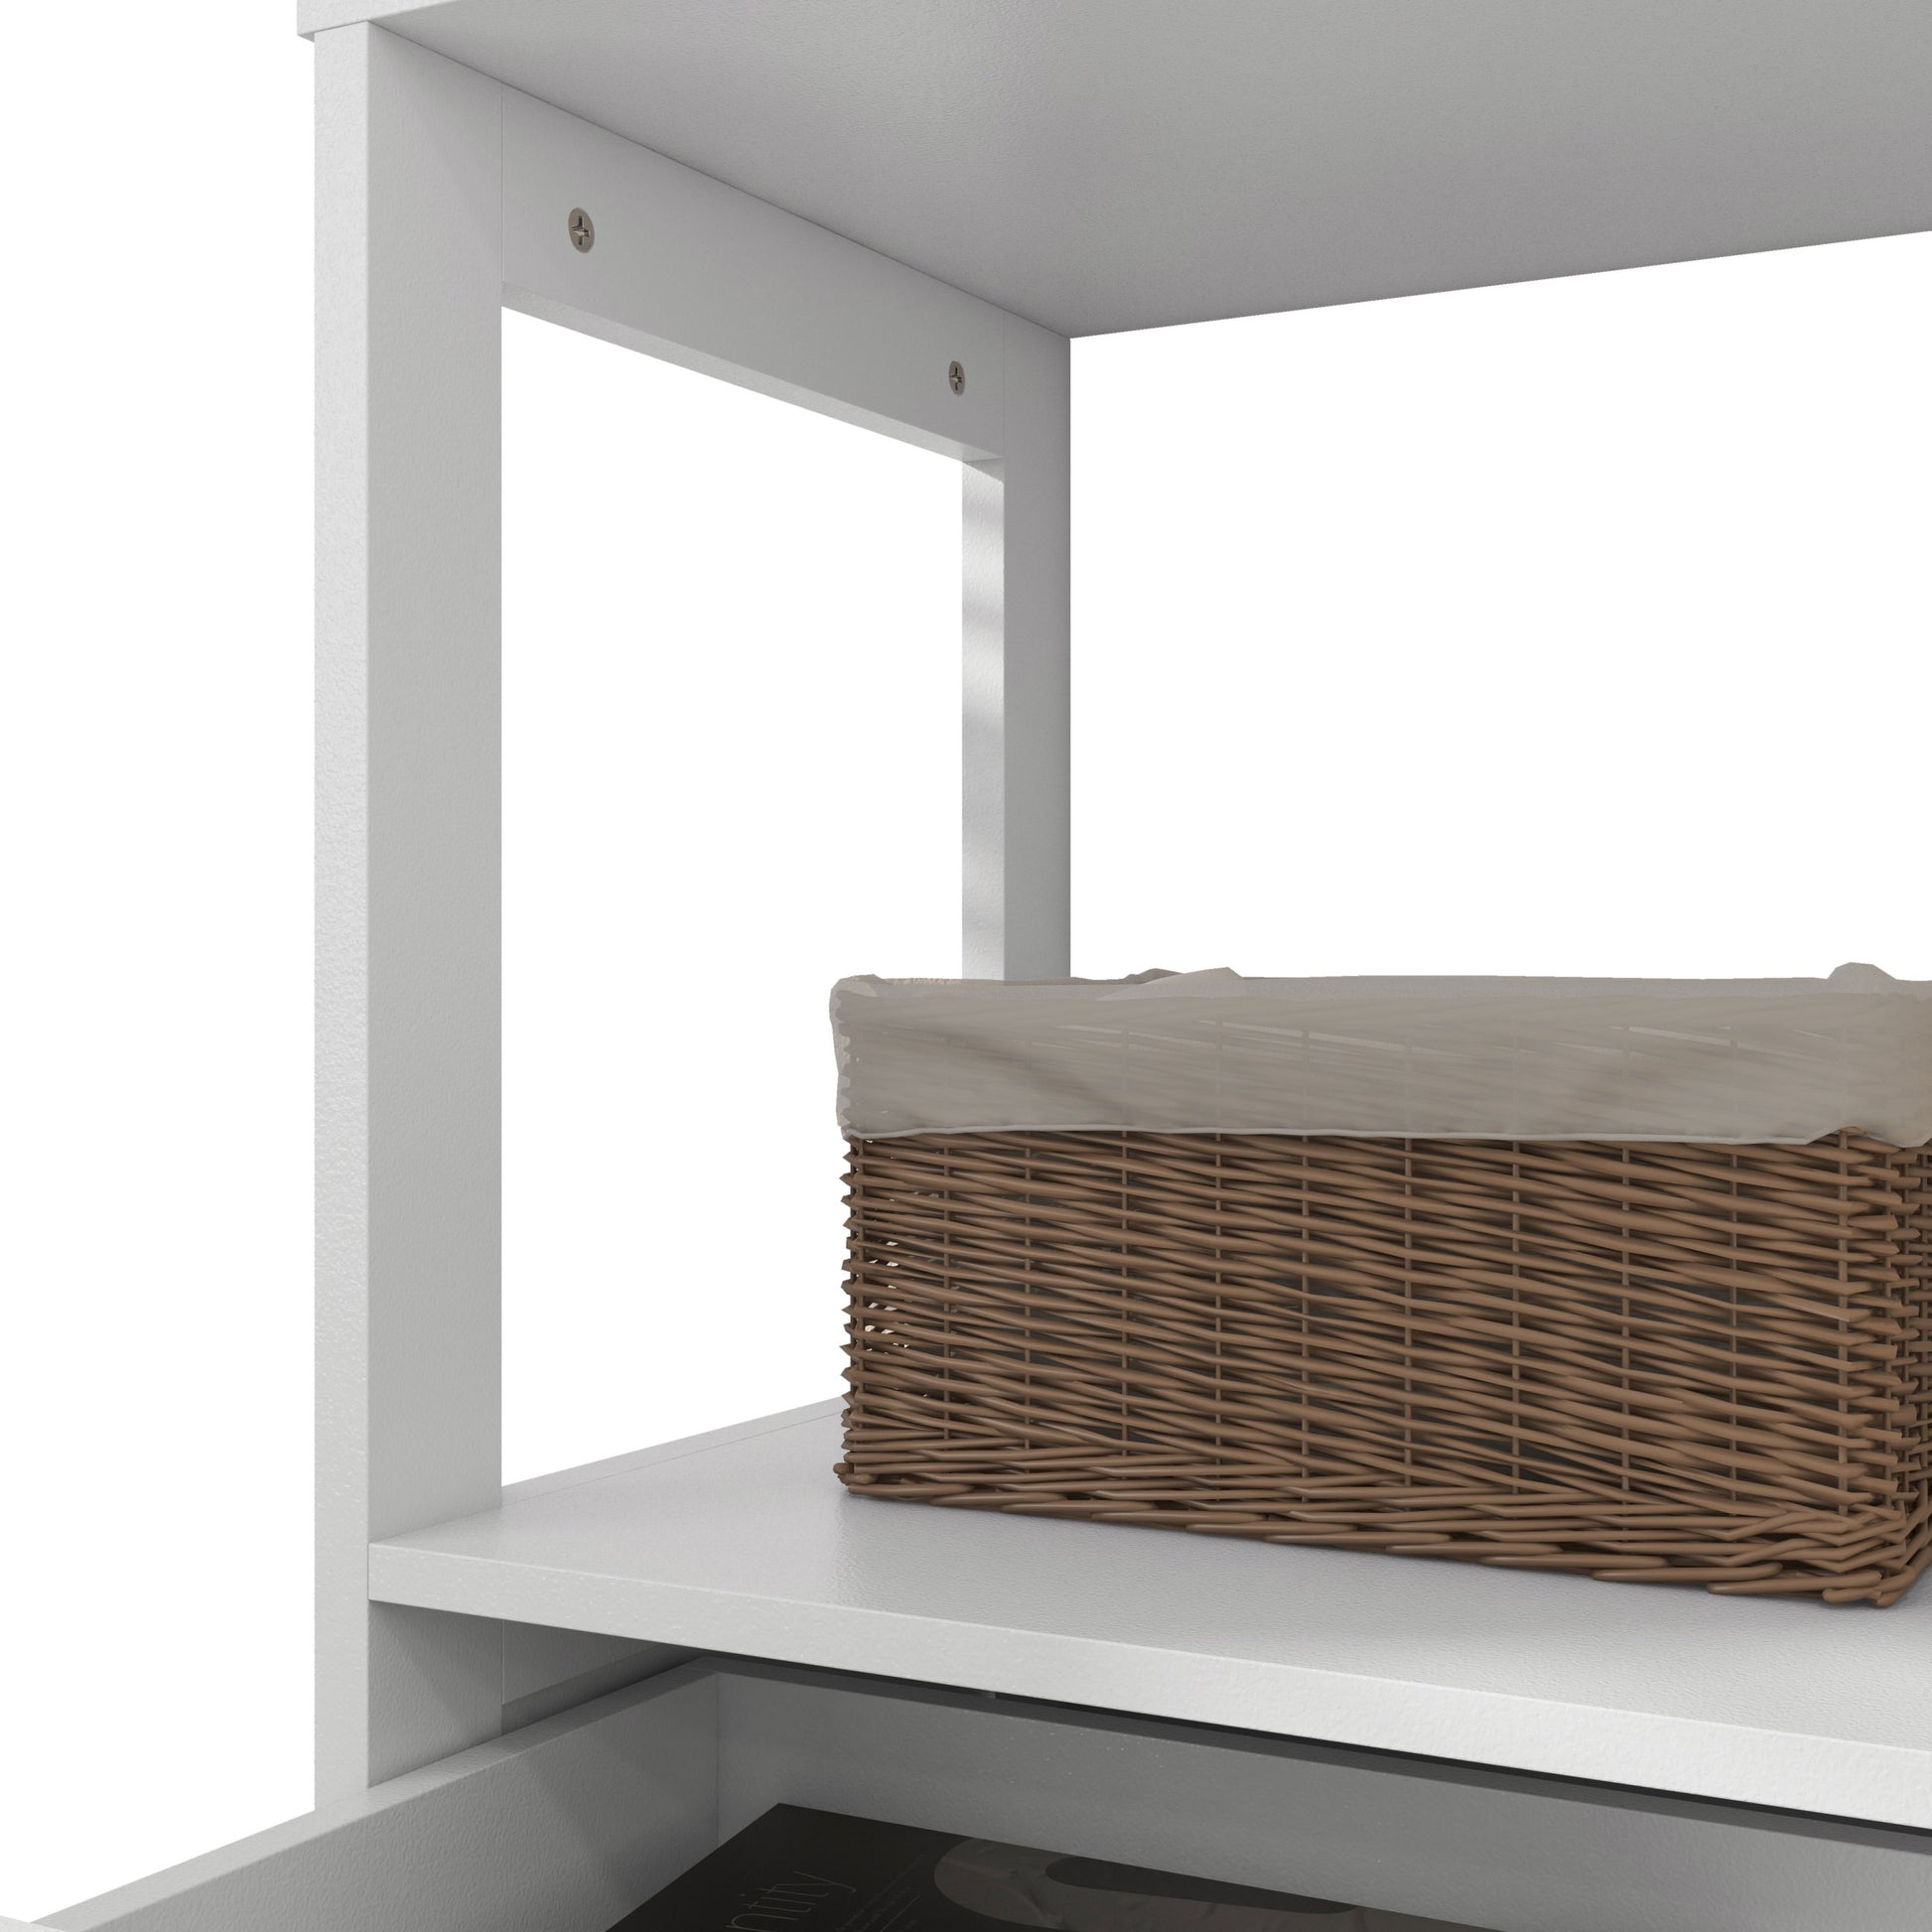 kleankin Farmhouse Bathroom Floor Cabinet, Linen